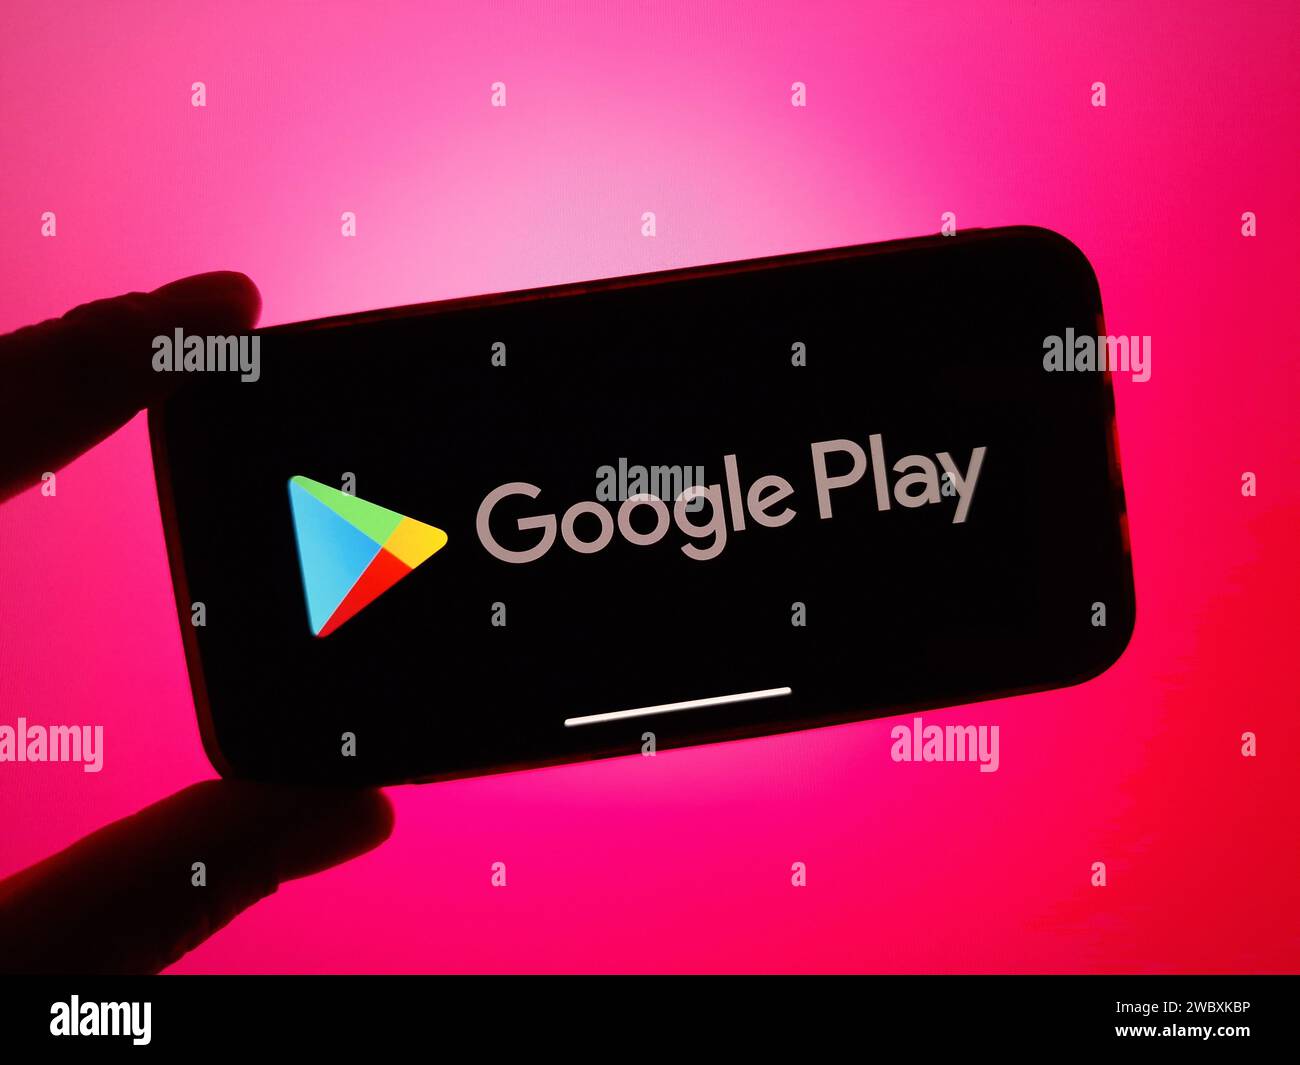 Konskie, Poland - January 12, 2024: Google Play logo displayed on mobile phone screen Stock Photo